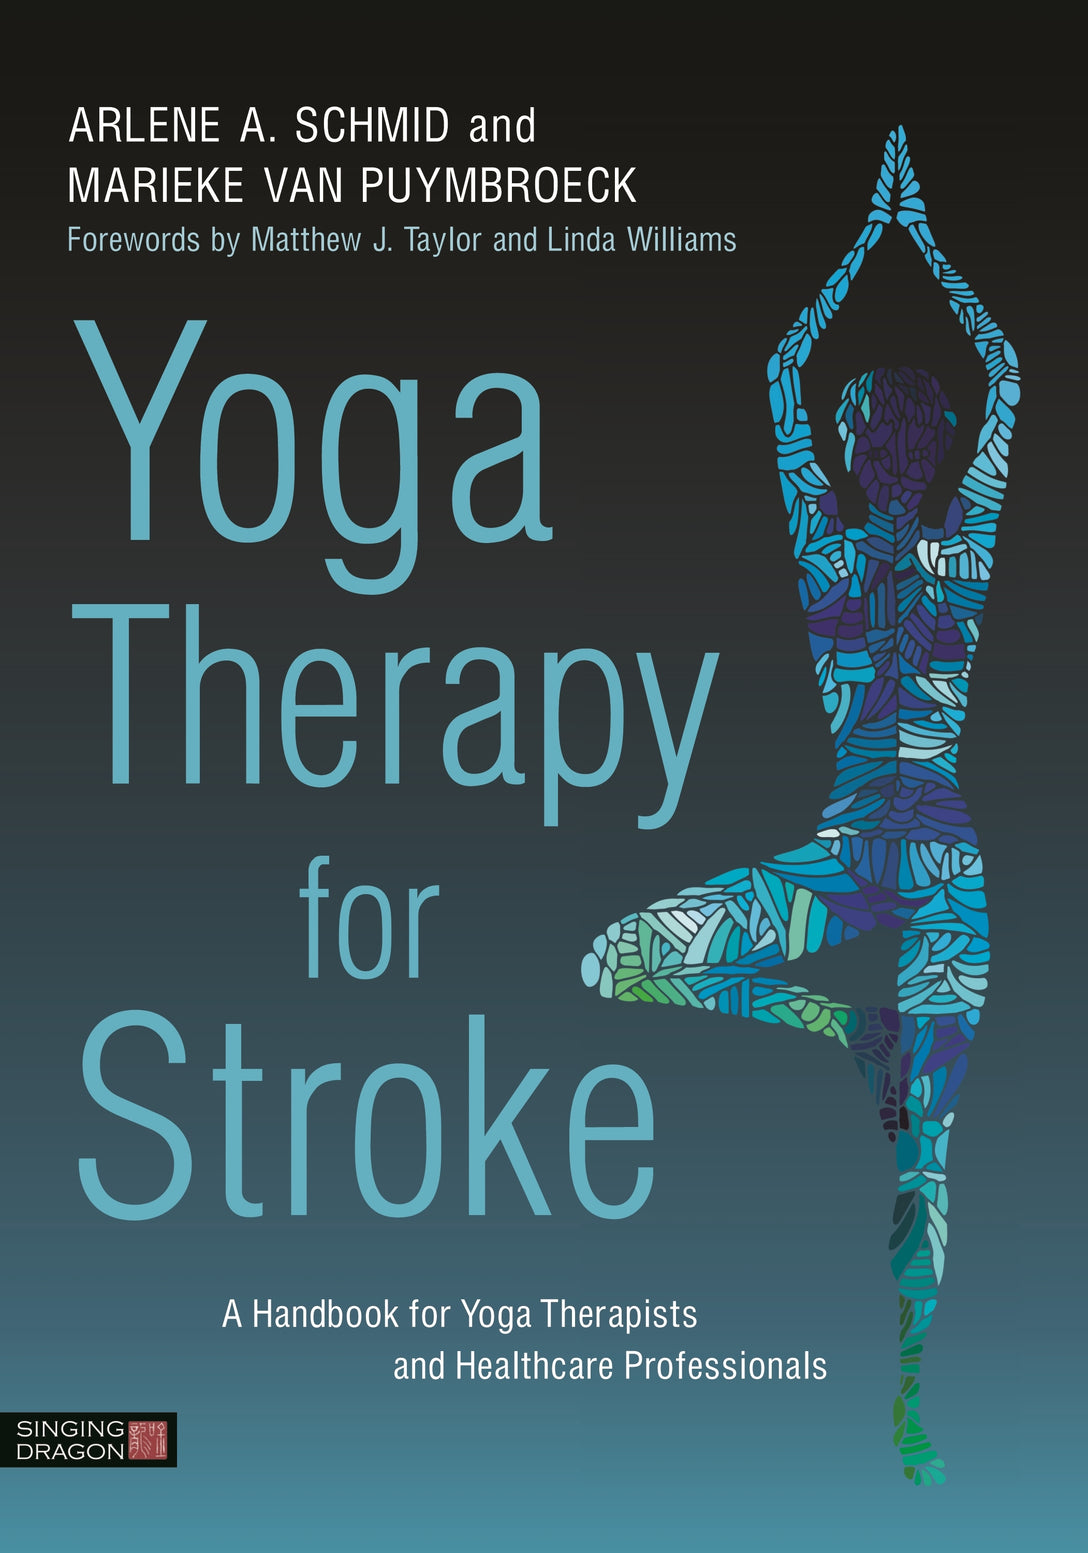 Yoga Therapy for Stroke by Matthew J. Taylor, Linda Williams, Arlene A. Schmid, Marieke van Puymbroeck